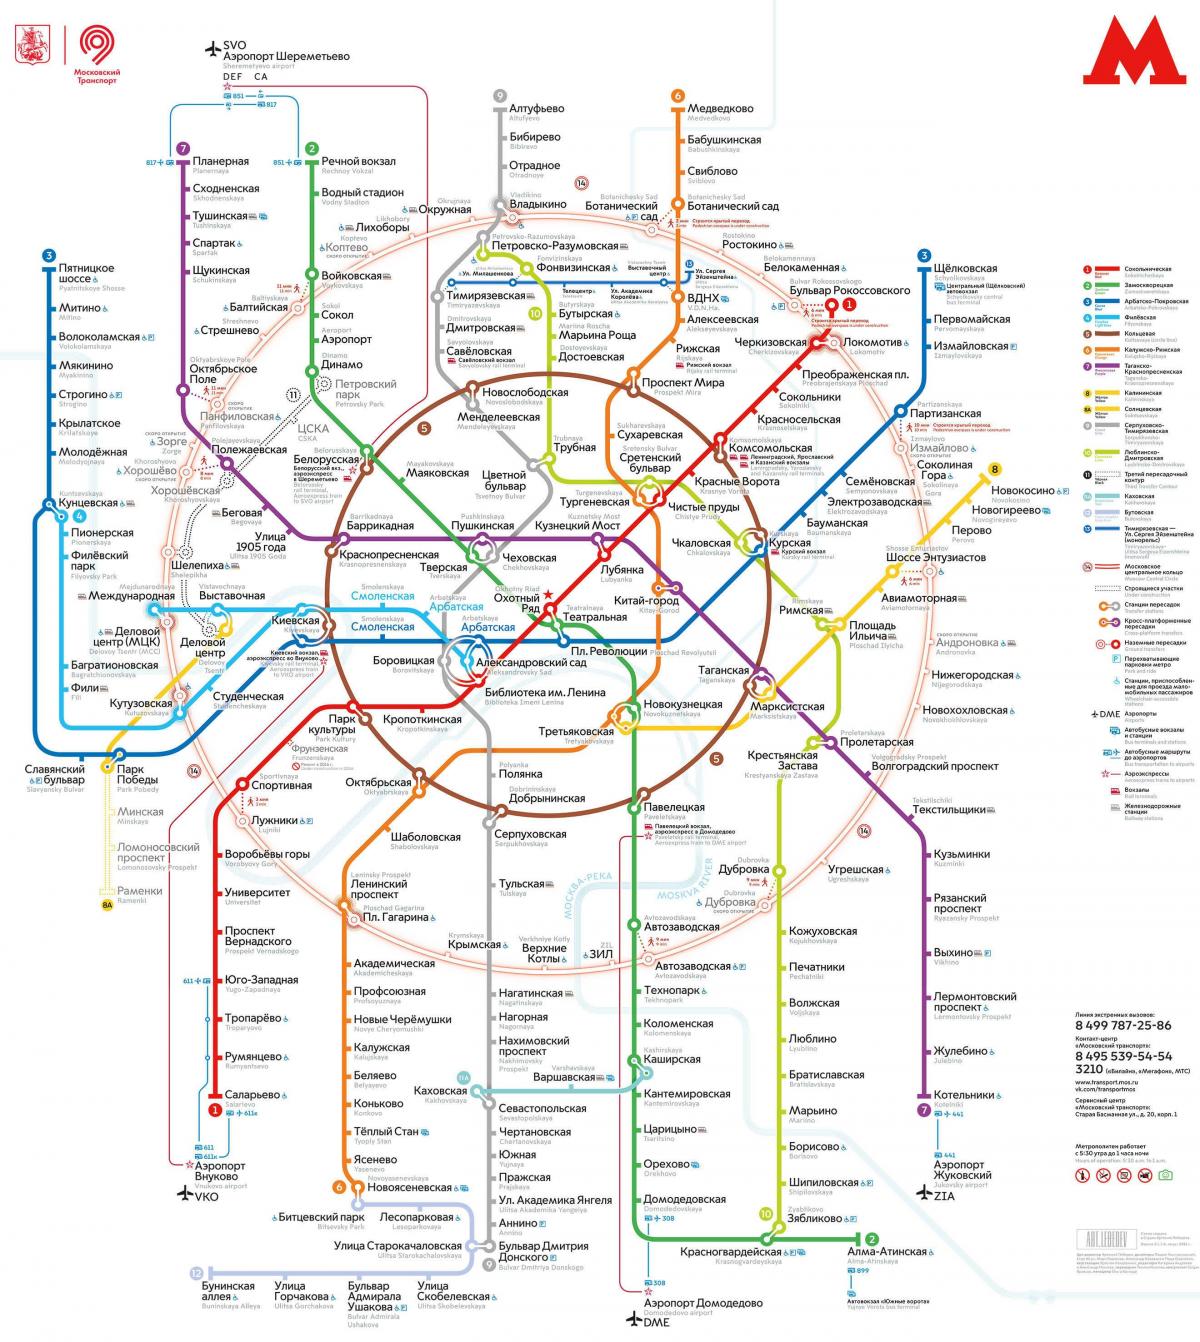 Moskova ulaşım haritası